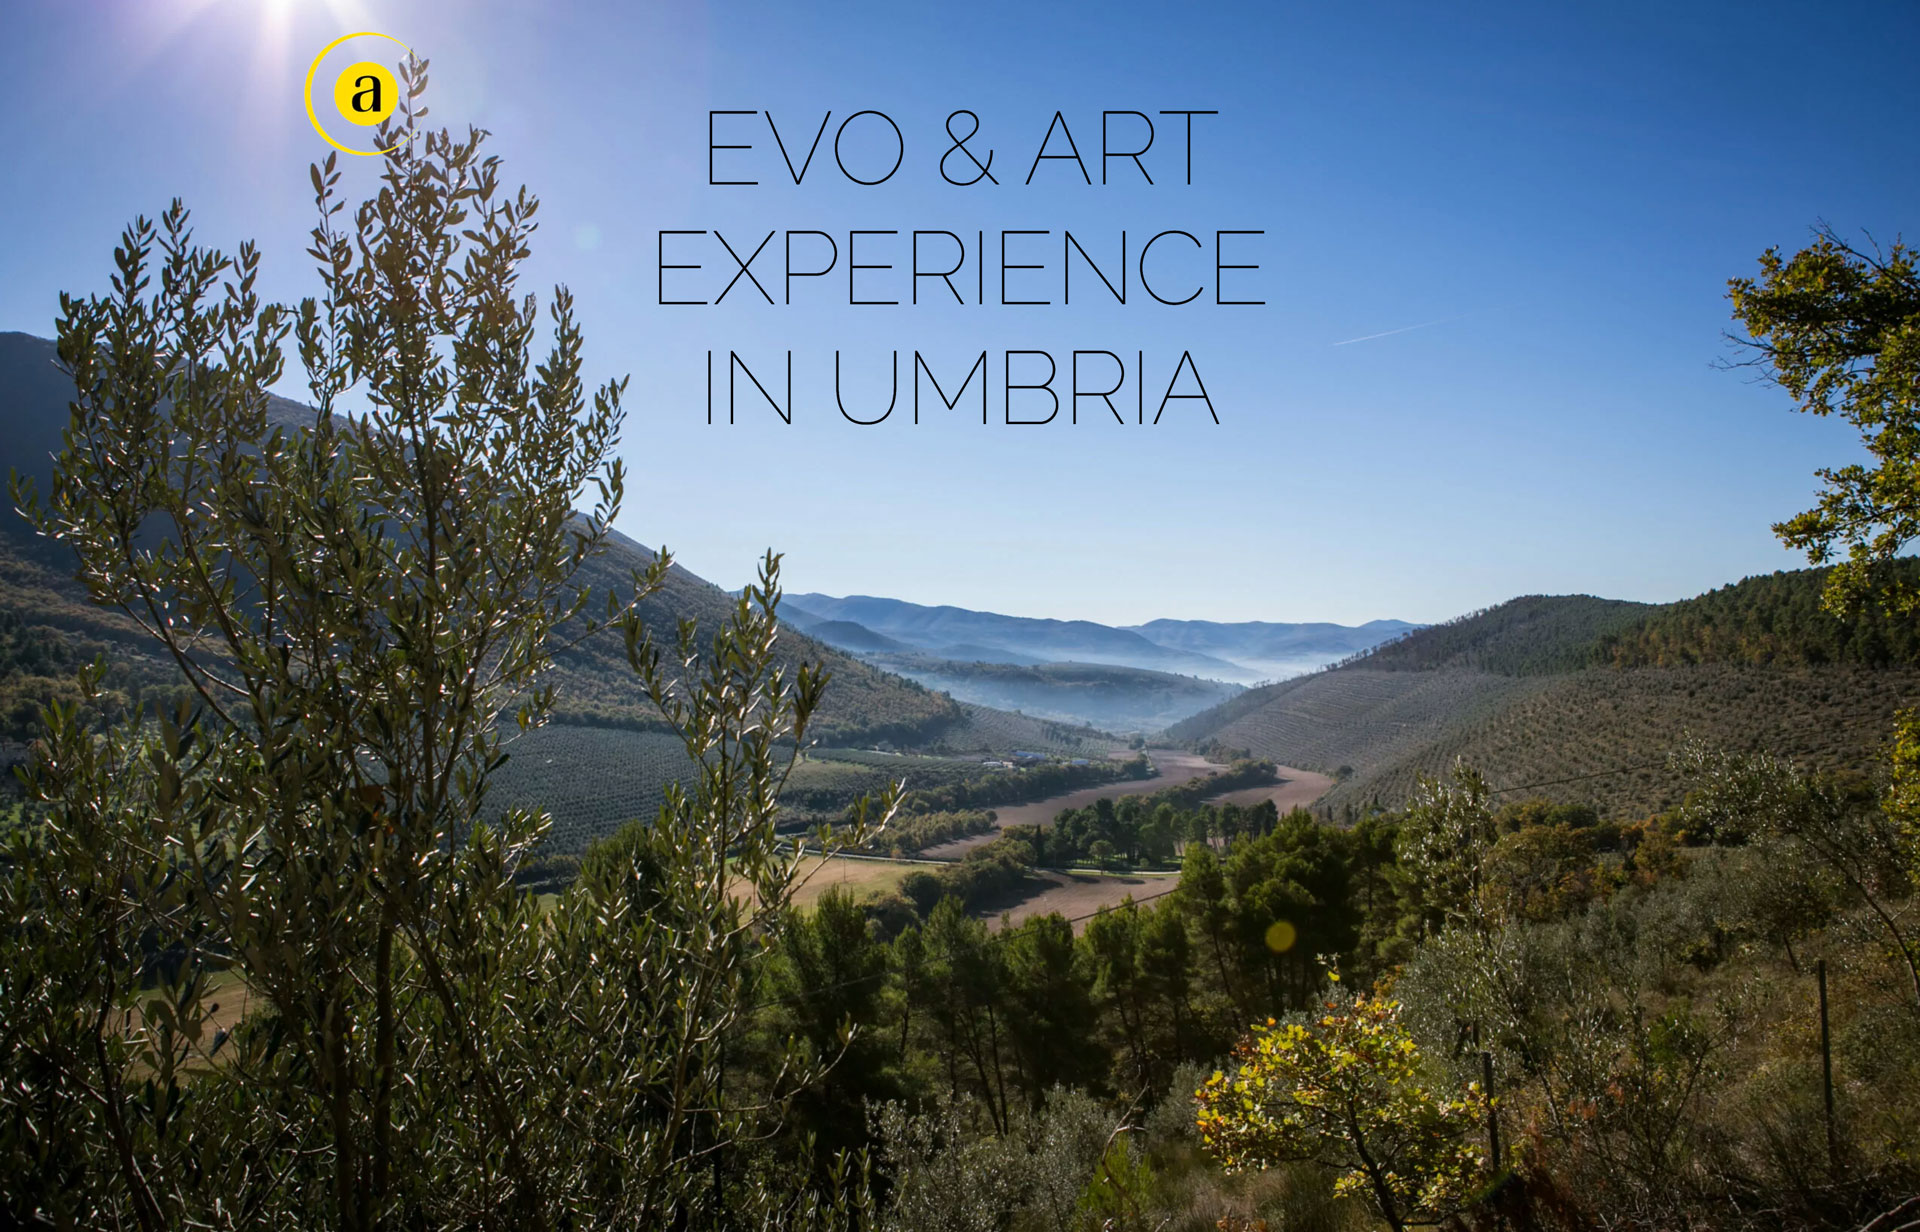 Voucher Evo & Art Experience in Umbria